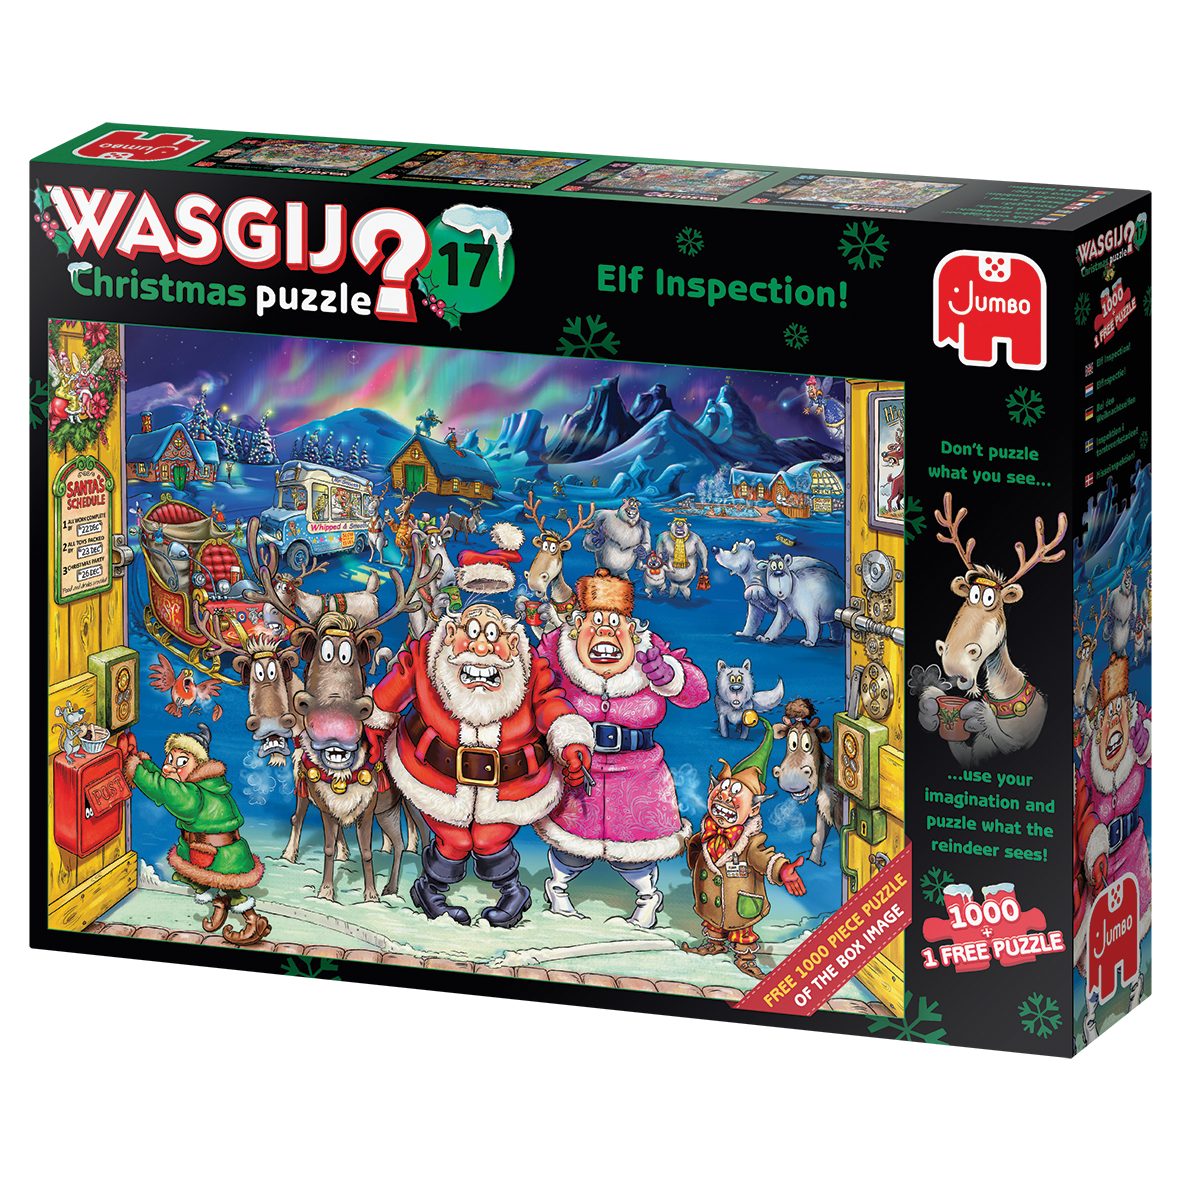 Christmas Puzzle Wasgij Spiele Jumbo Puzzleteile Inspection!, 1000 25003 - Elf 17